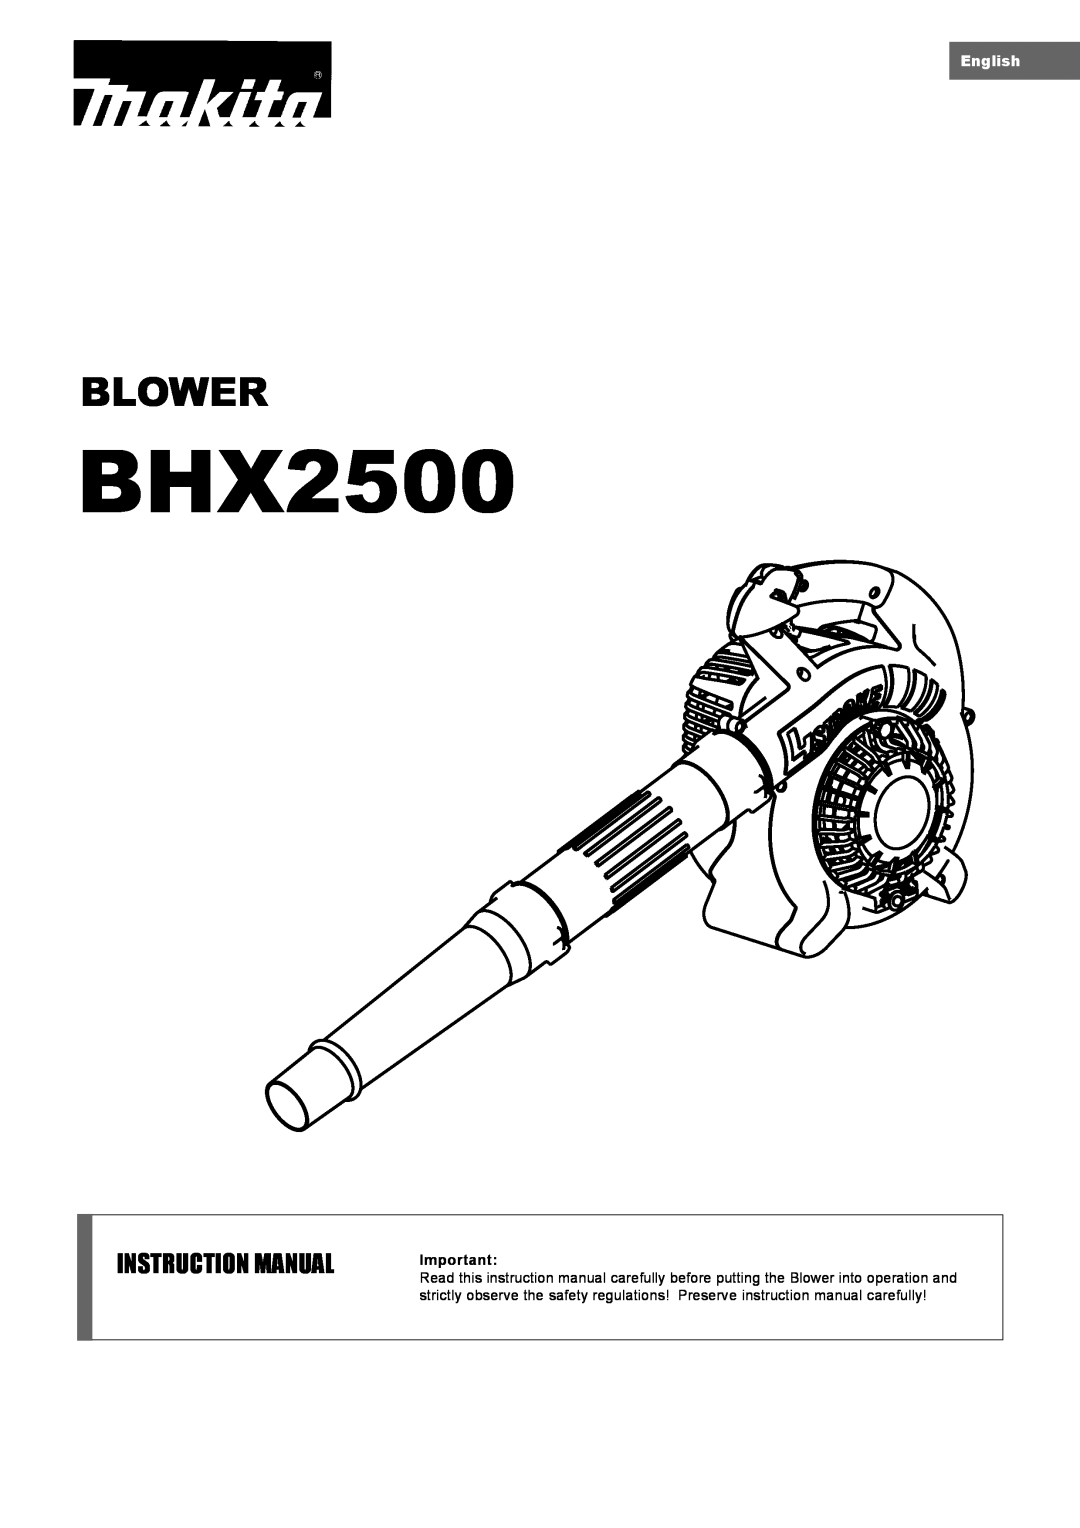 Makita BHX2500 instruction manual Blower, English 